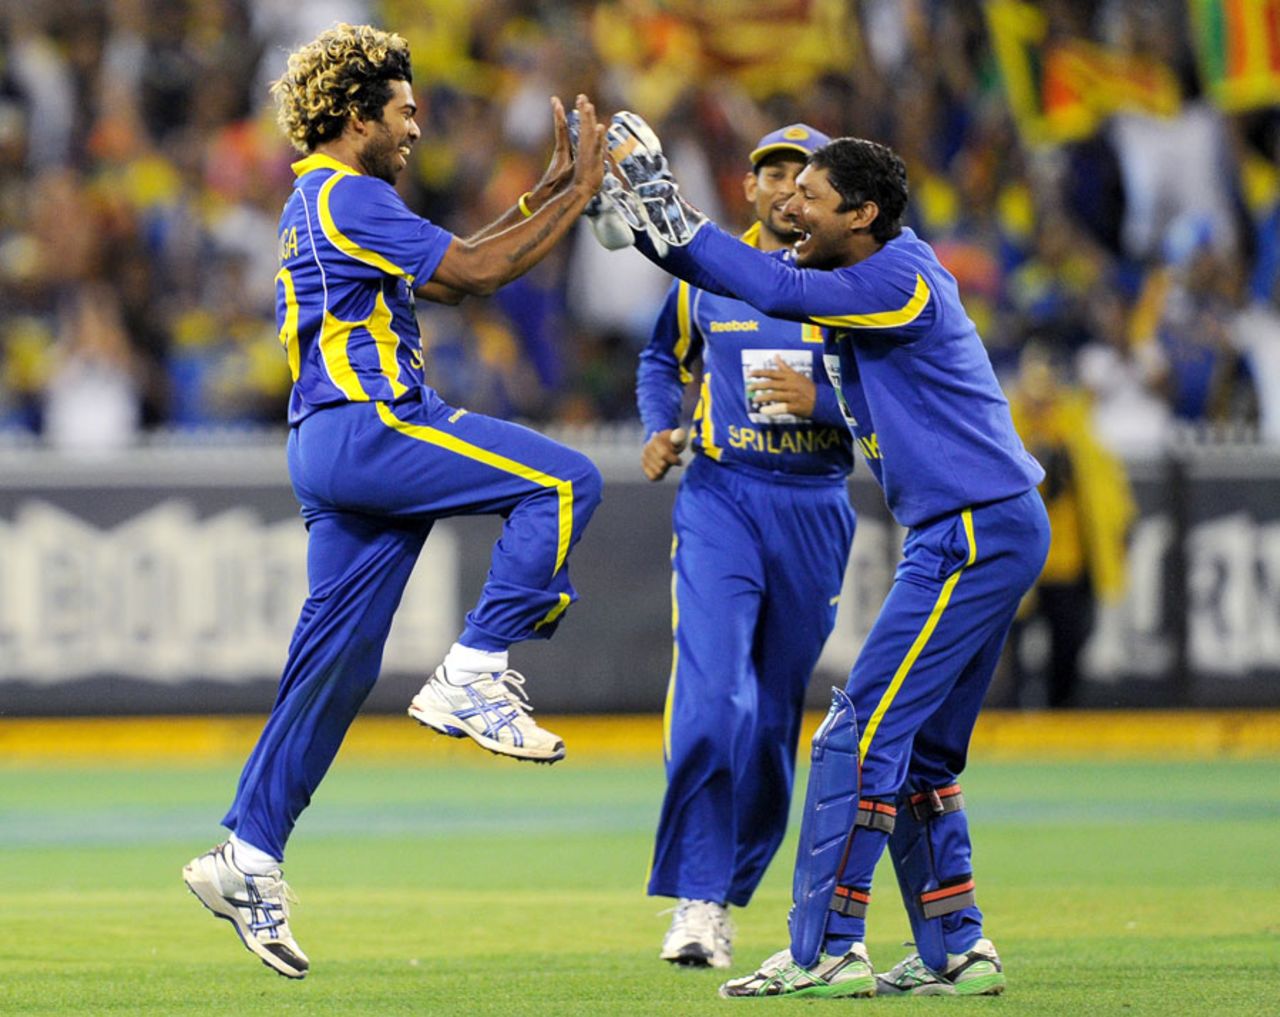 Lasith Malinga celebrates the wicket of Shane Watson, Australia v Sri Lanka, CB series, Melbourne, March 2, 2012